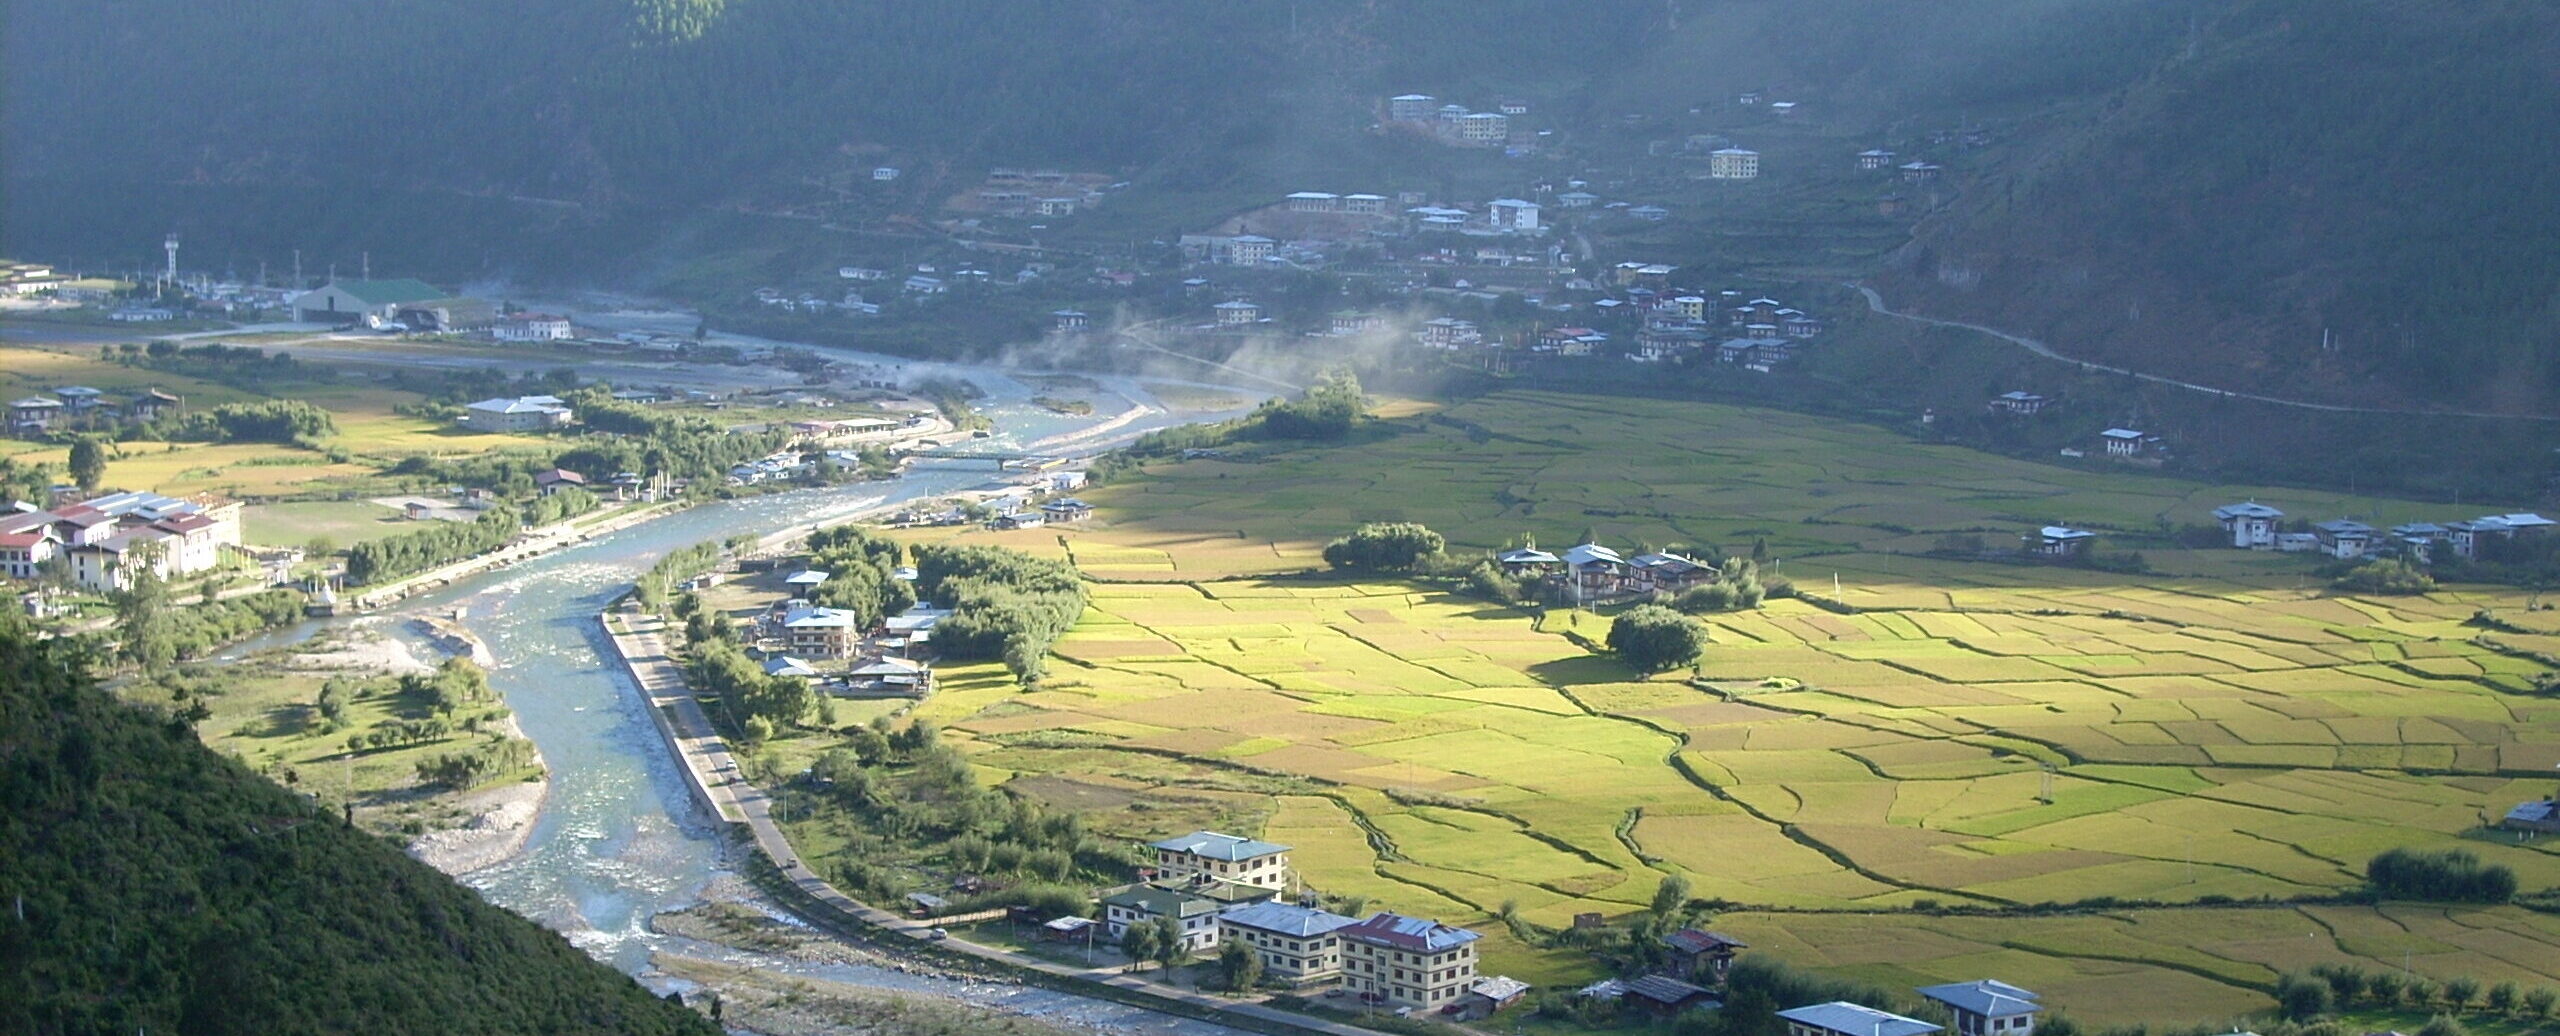 Bhutan Cultural and Village hikes